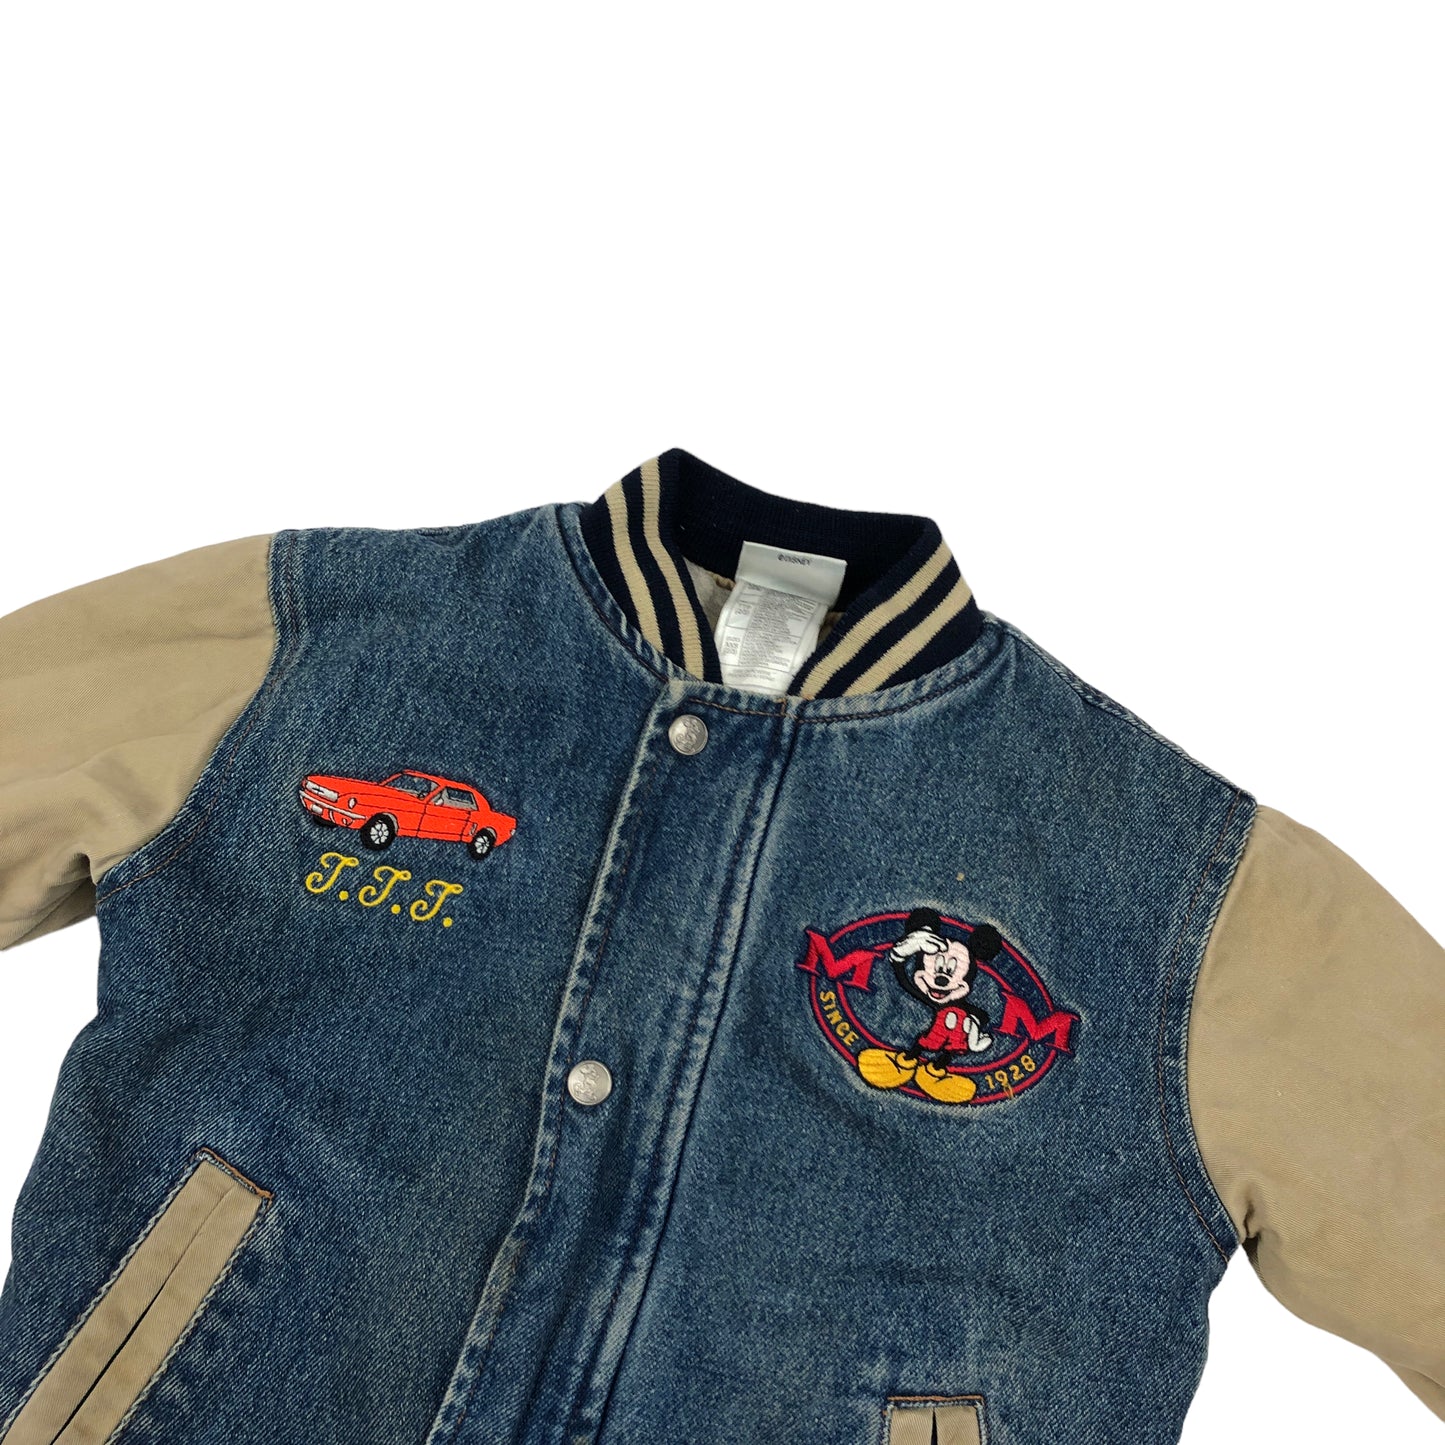 Vintage Disney Denim Baseball Jacket (Age 2-3)